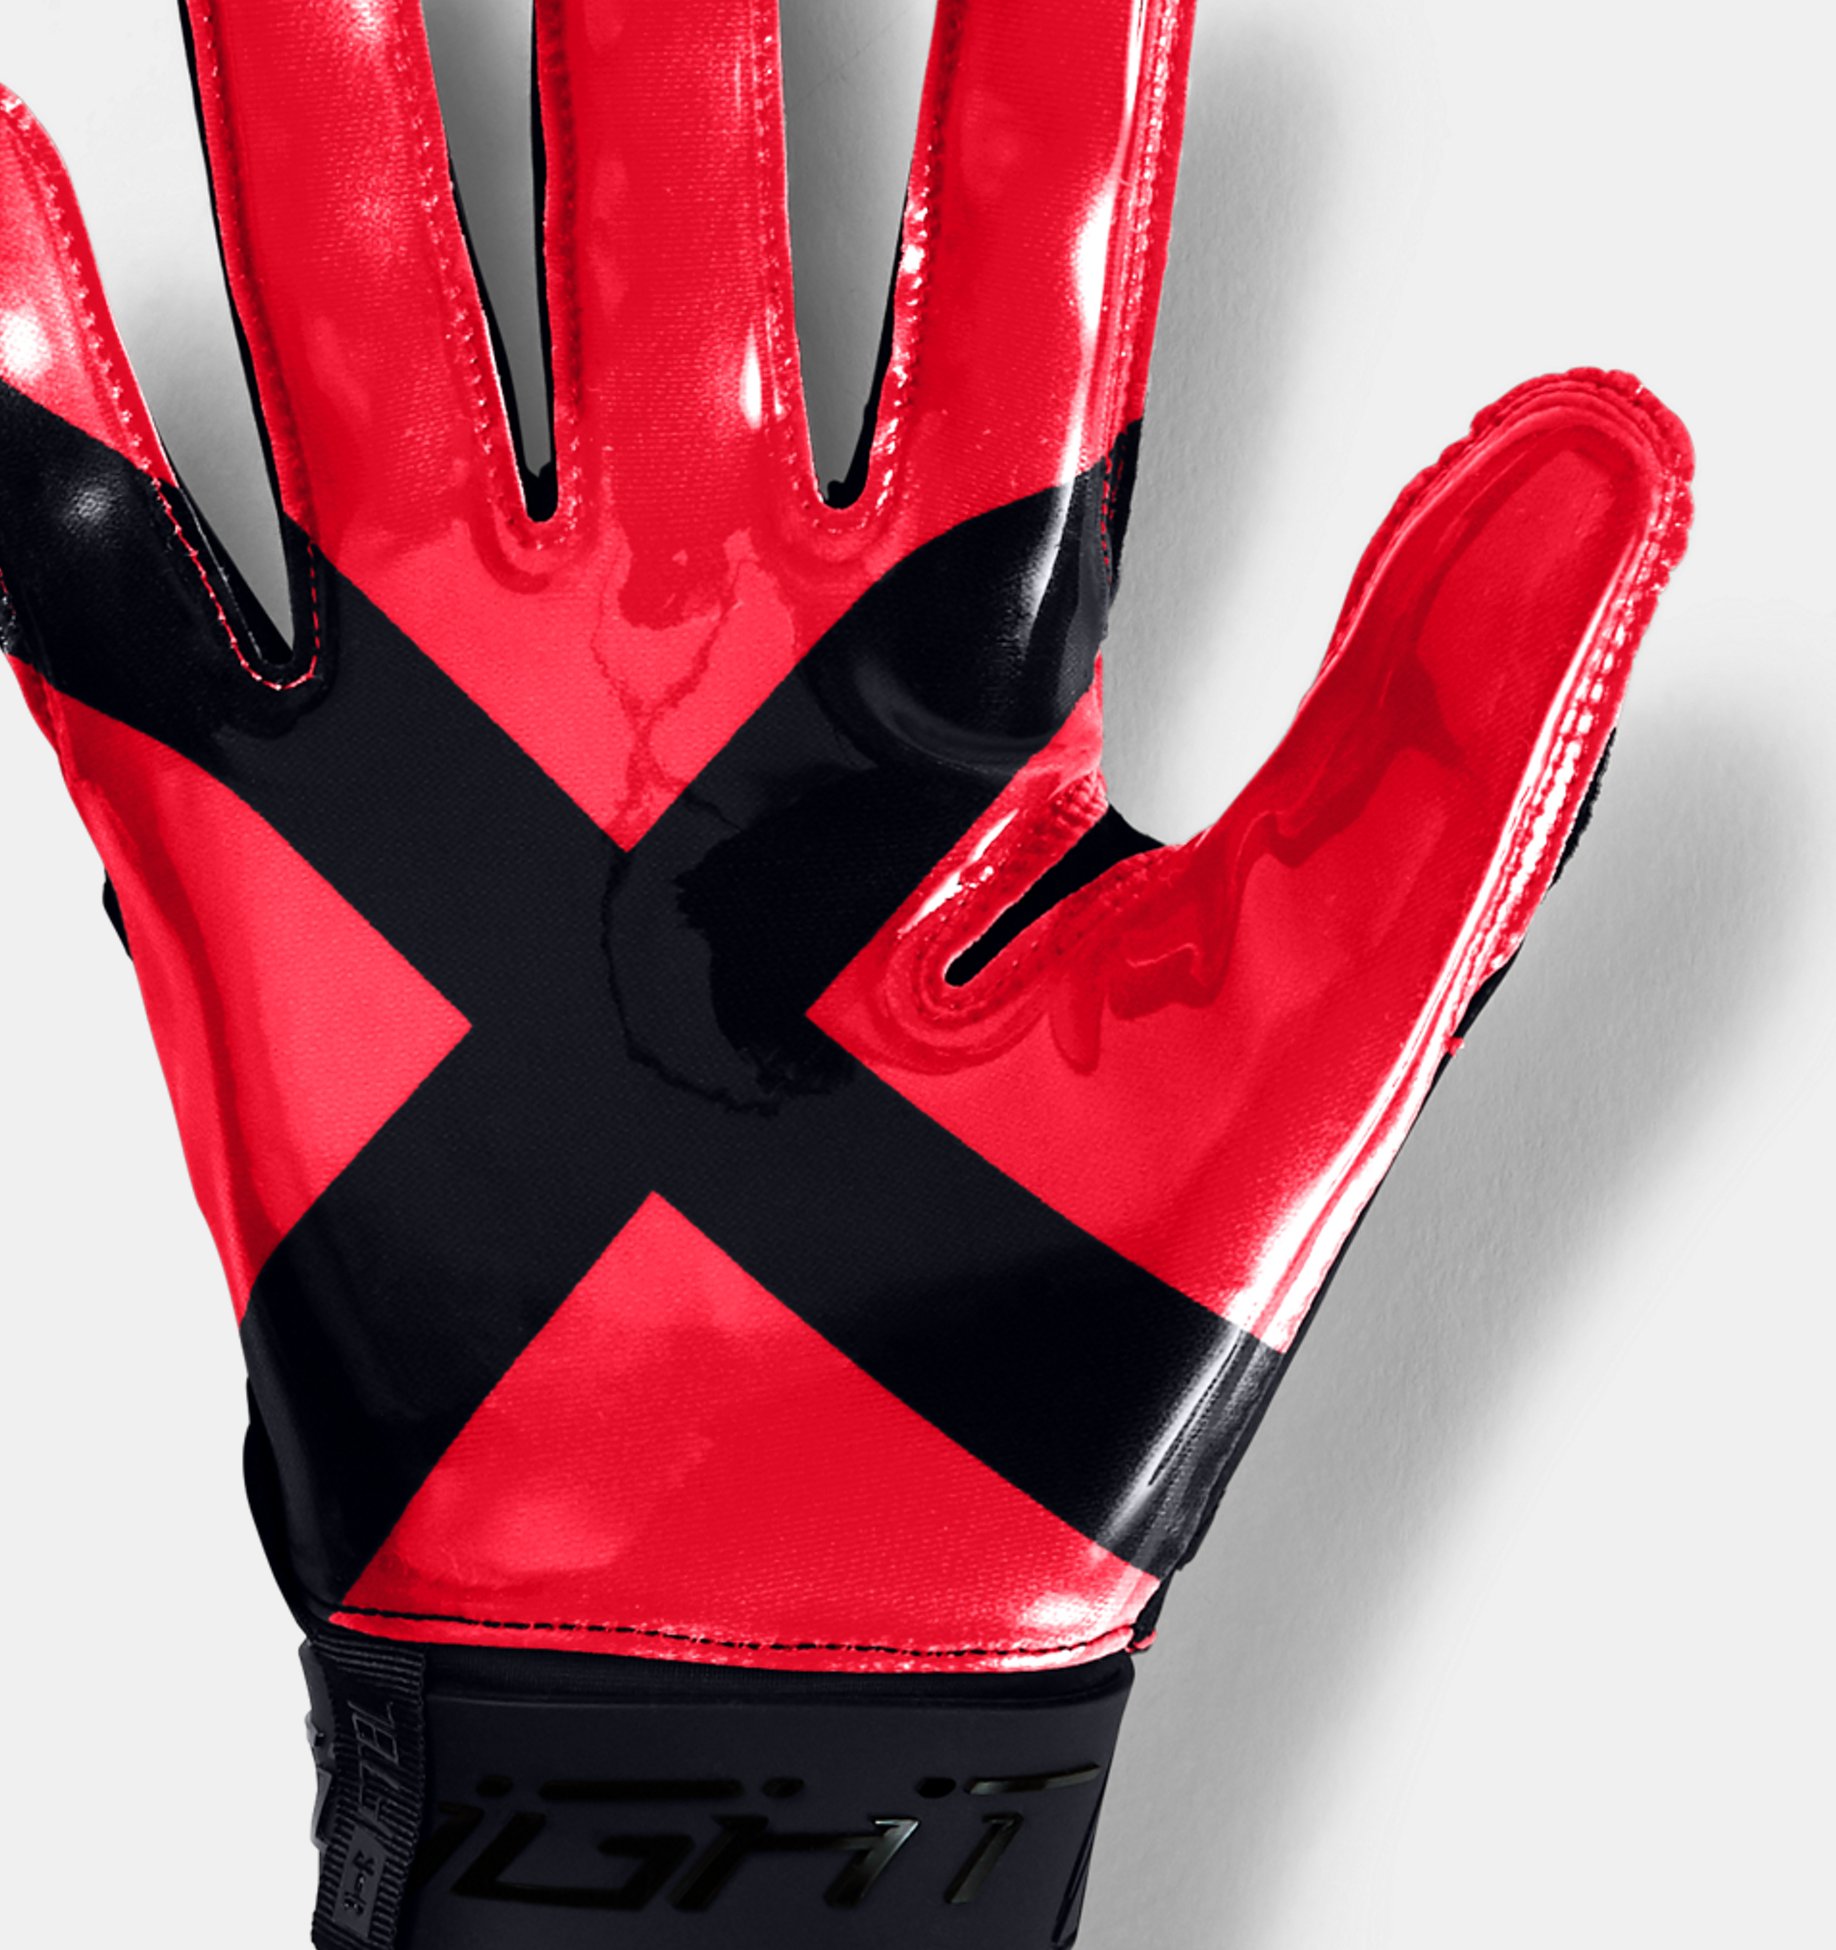 Details about   NEW Under Armour UA Spotlight Pro Glue Grip Football Gloves Size:XL 1304699-001 